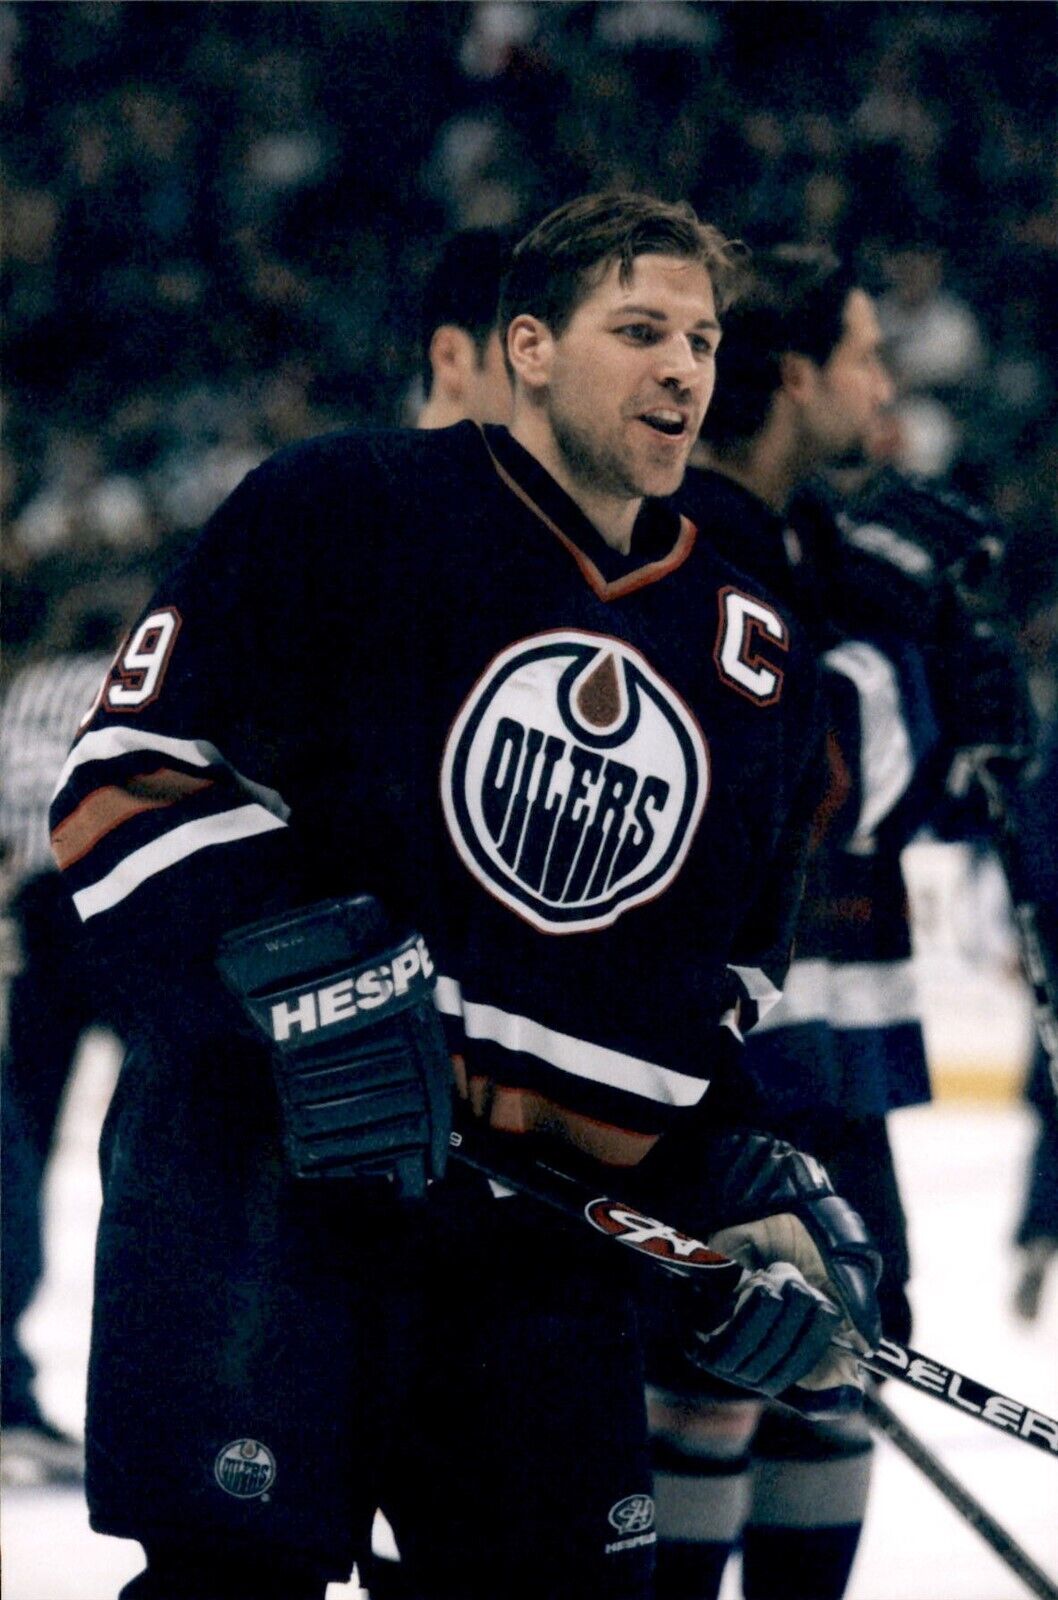 PF37 2001 Orig Photo NHL HOCKEY ALL-STAR GAME DOUG WEIGHT EDMONTON OILERS CENTER